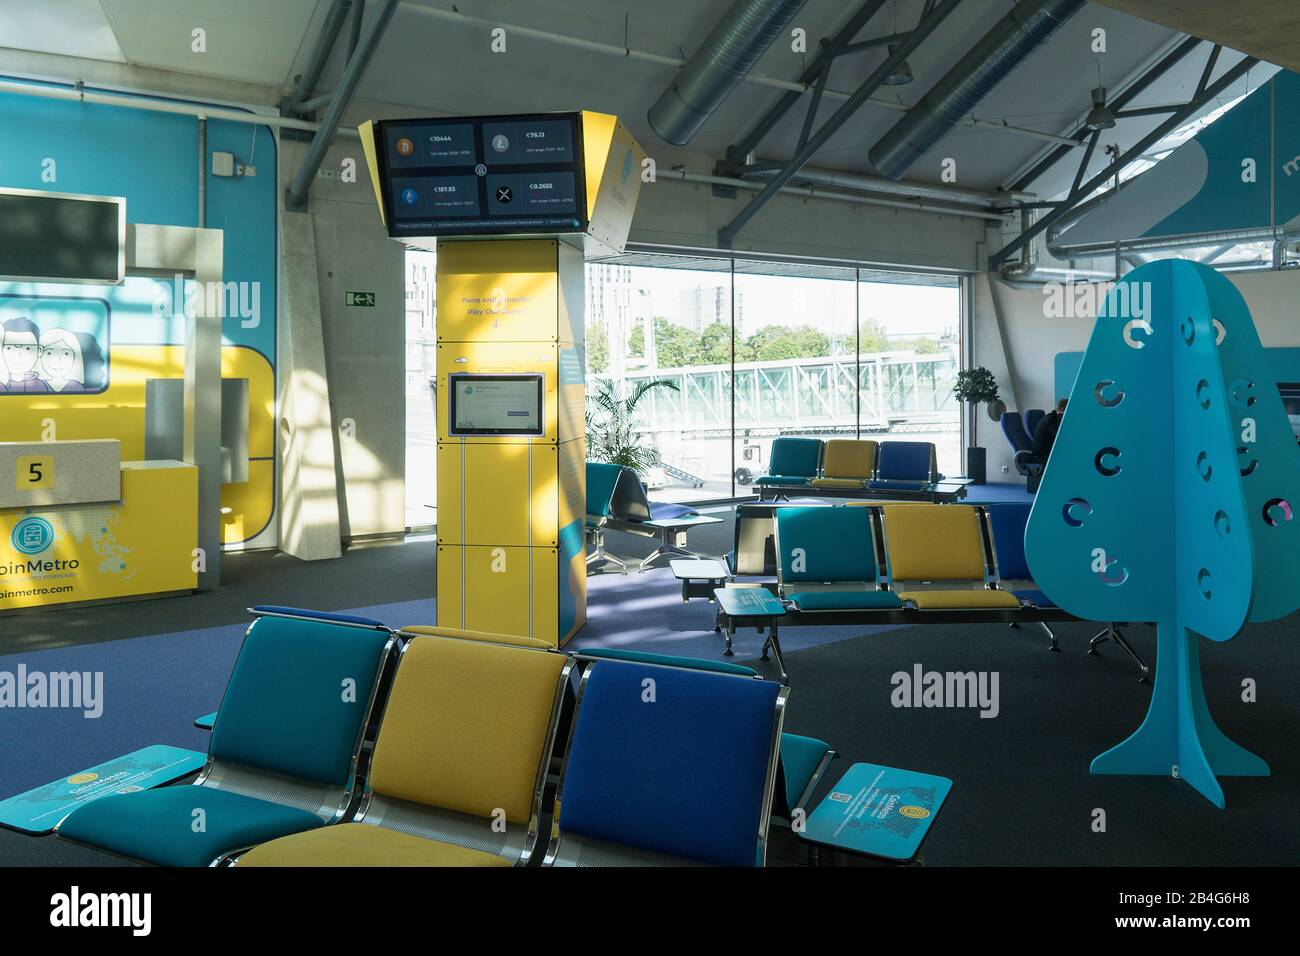 Estonia, Tallinn, Airport, Airport Lennart Meri, modern passenger terminal, Gate 5, 'subway'. Stock Photo